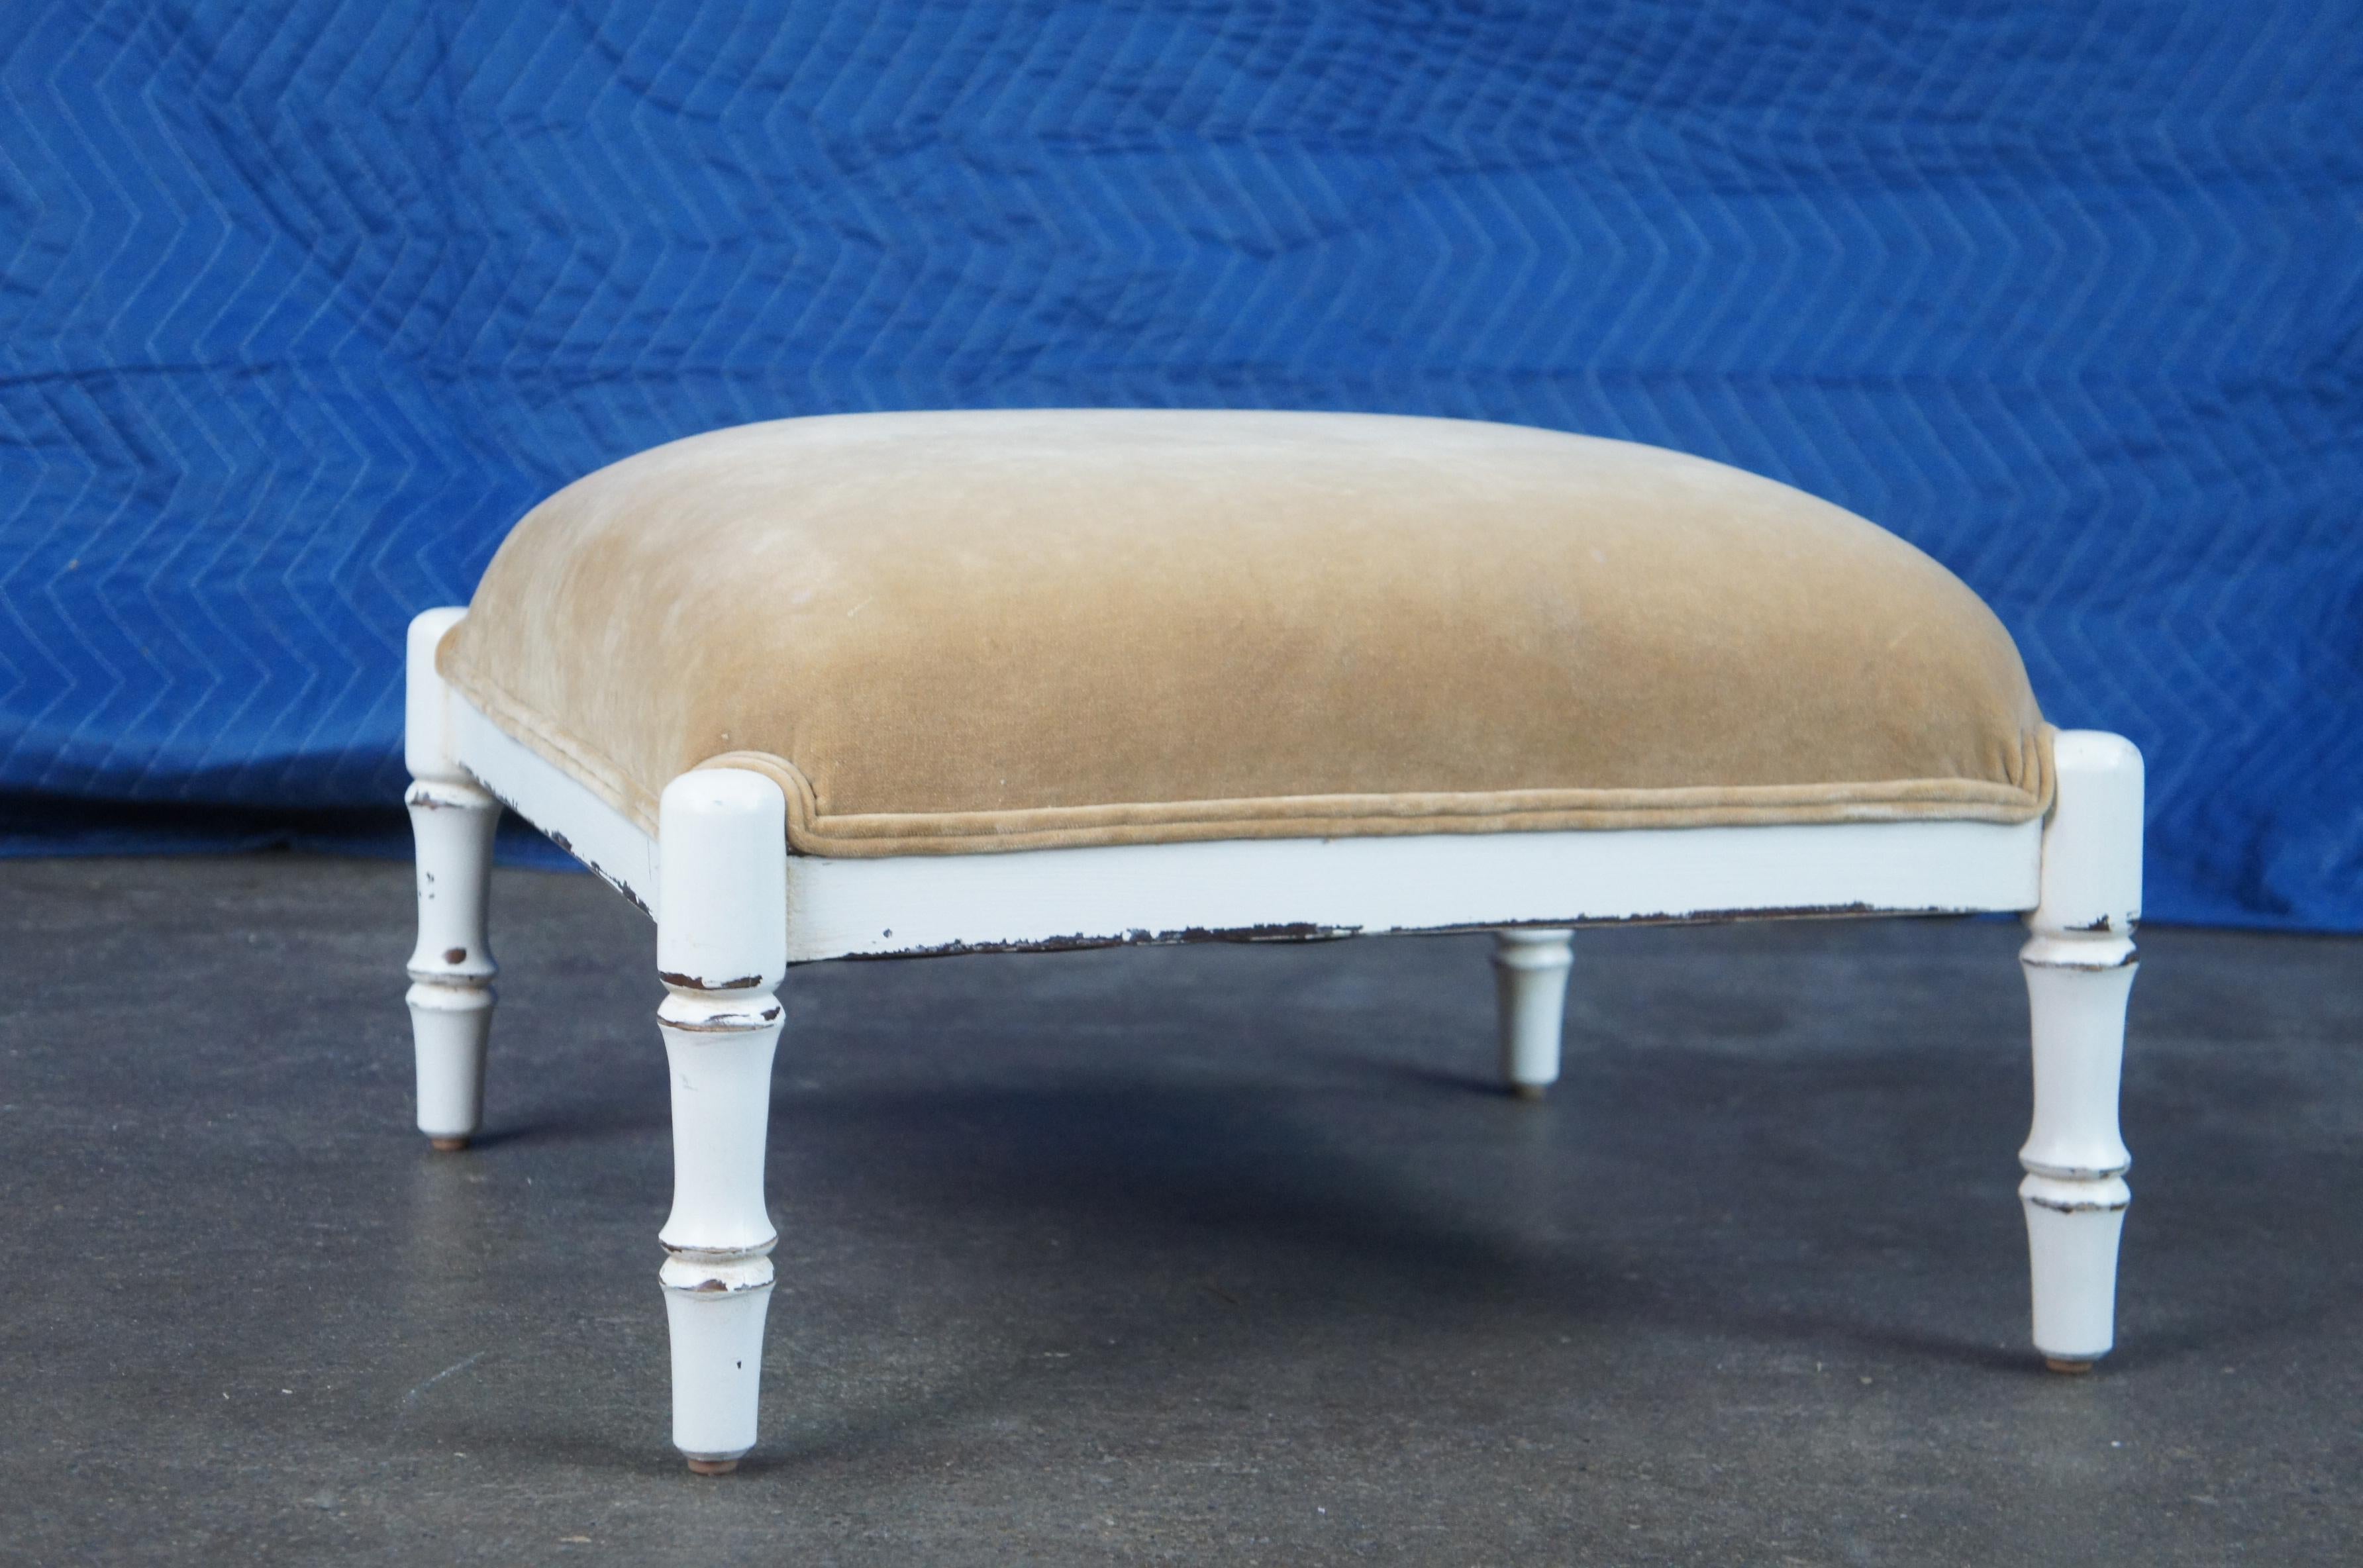 20th Century Ballard Designs Suede Foot Rest Stool Ottoman Pouf Bench Seat Square Chic